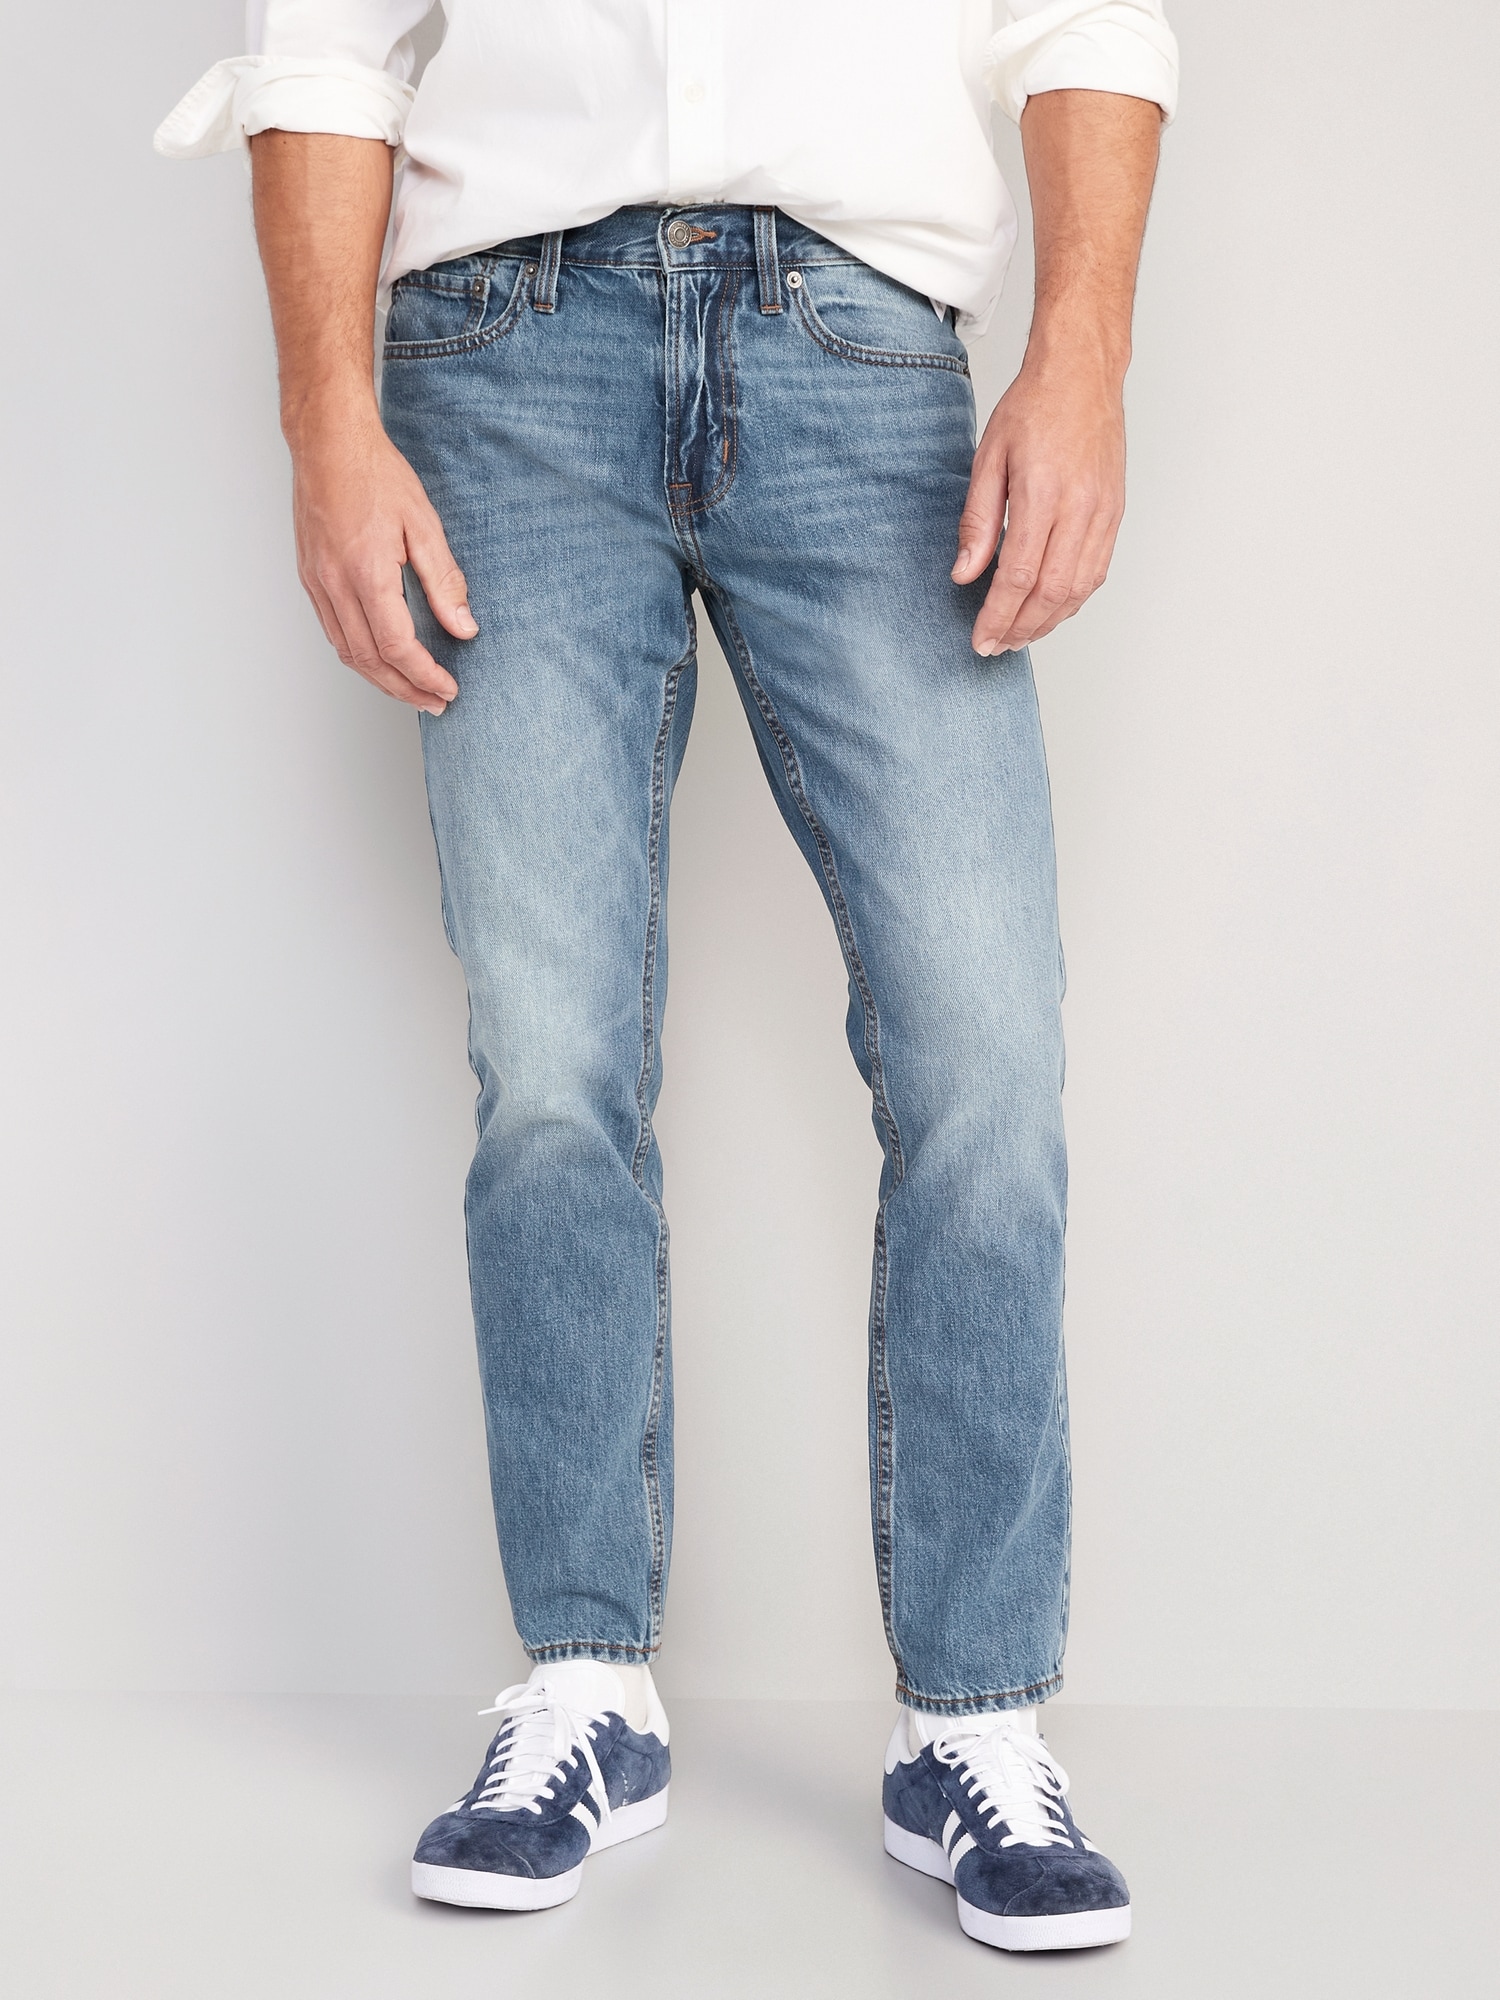 Melodieus Kader Verrijking Wow Slim Non-Stretch Jeans for Men | Old Navy